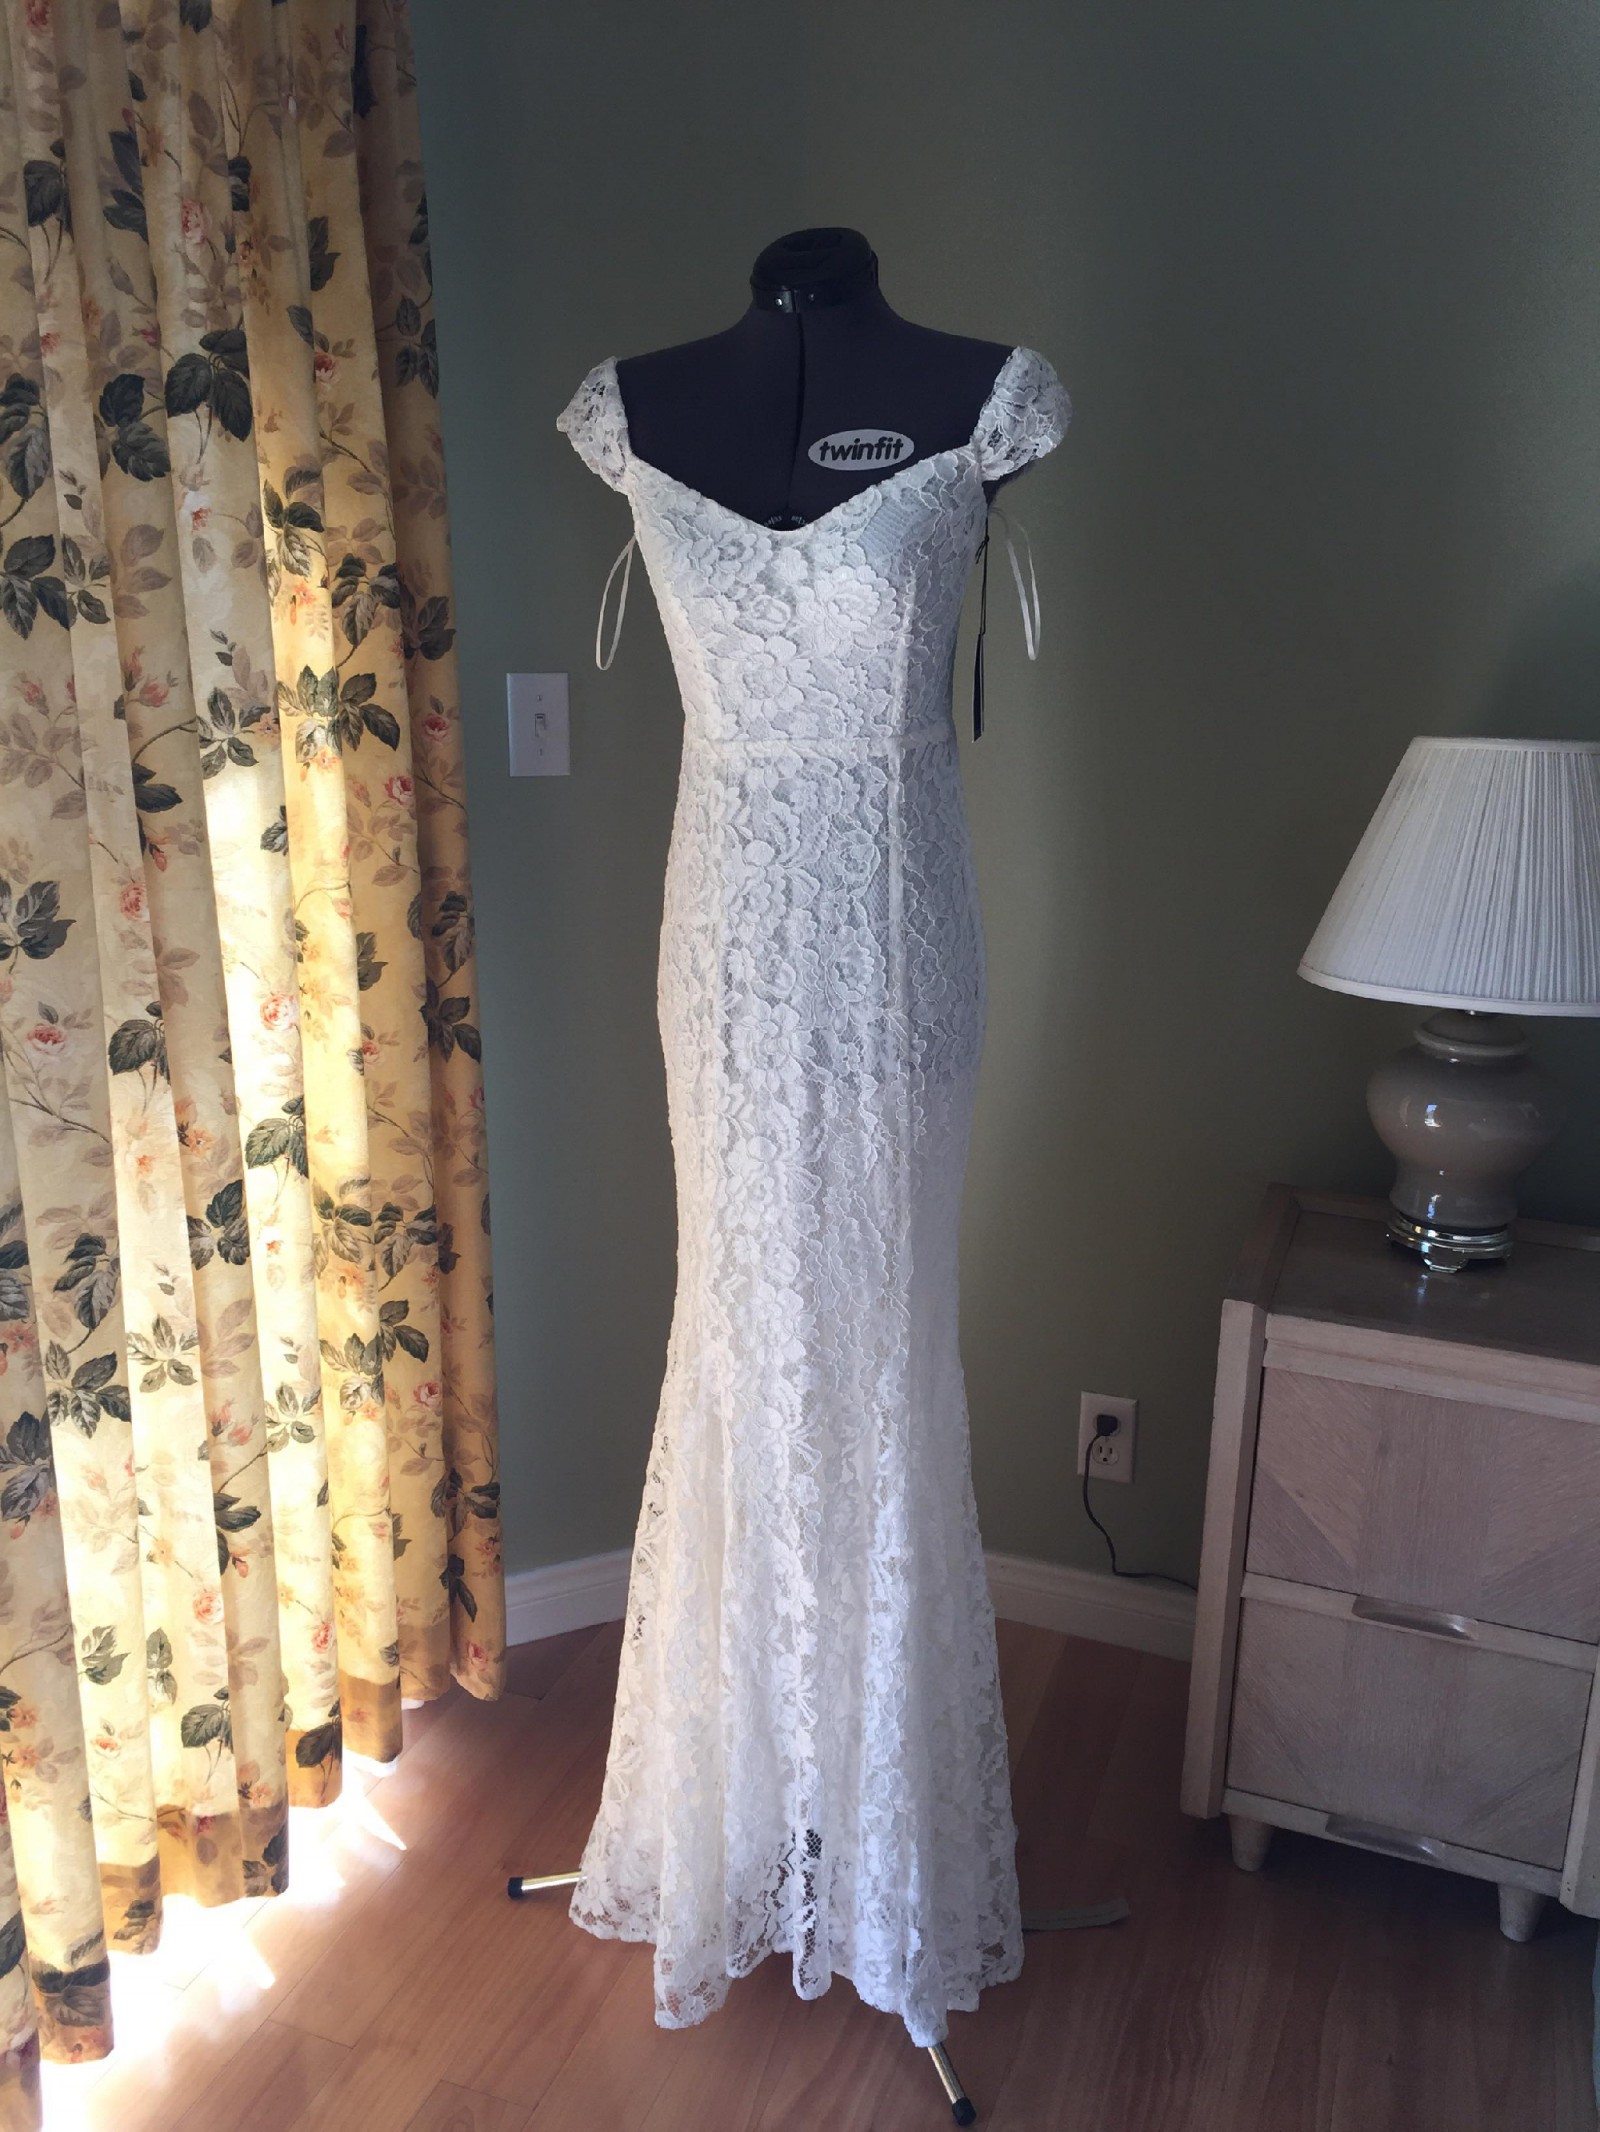 Reformation Freesia New Wedding Dress Save 23% - Stillwhite